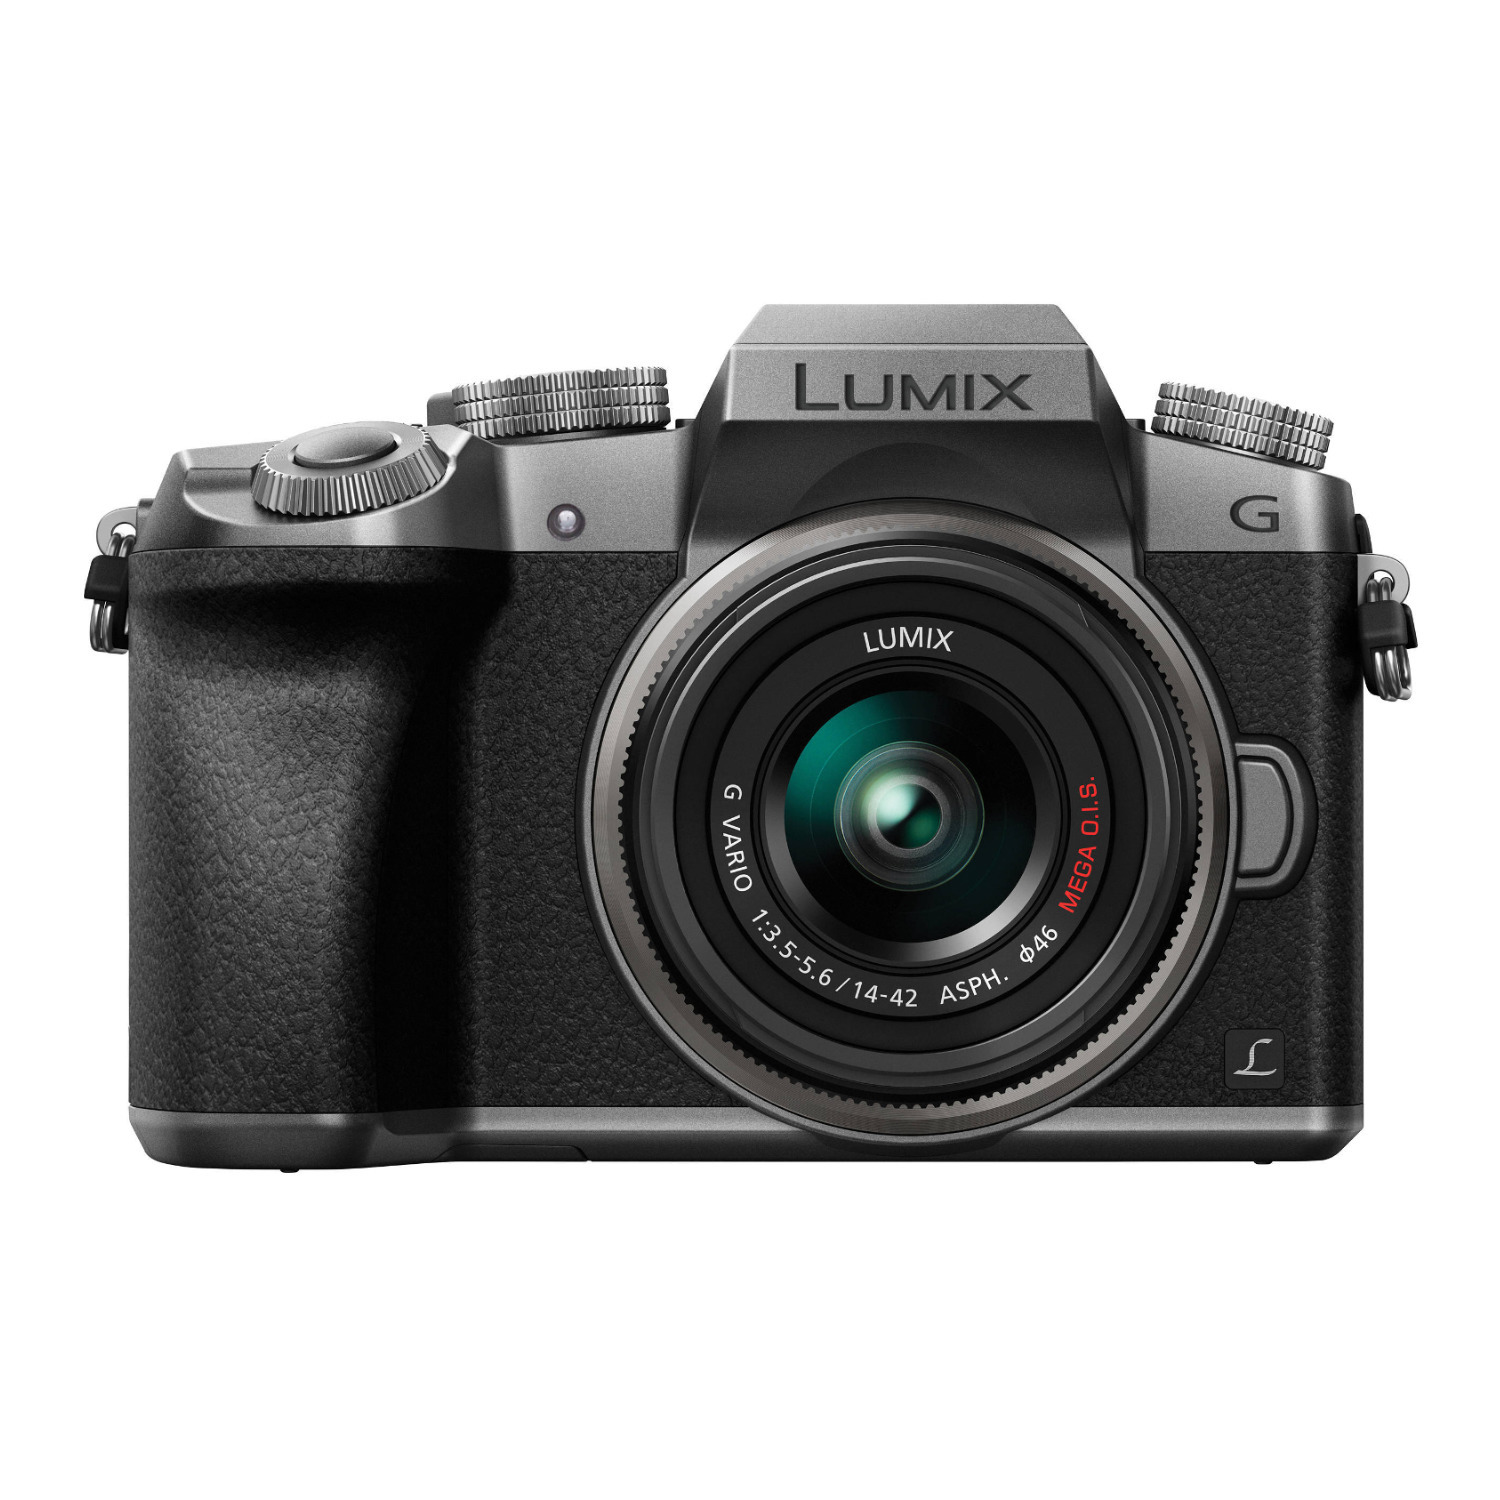 Panasonic LUMIX G7 Mirrorless Camera with 14-42mm f/3.5-5.6 Camera Lens in Silver